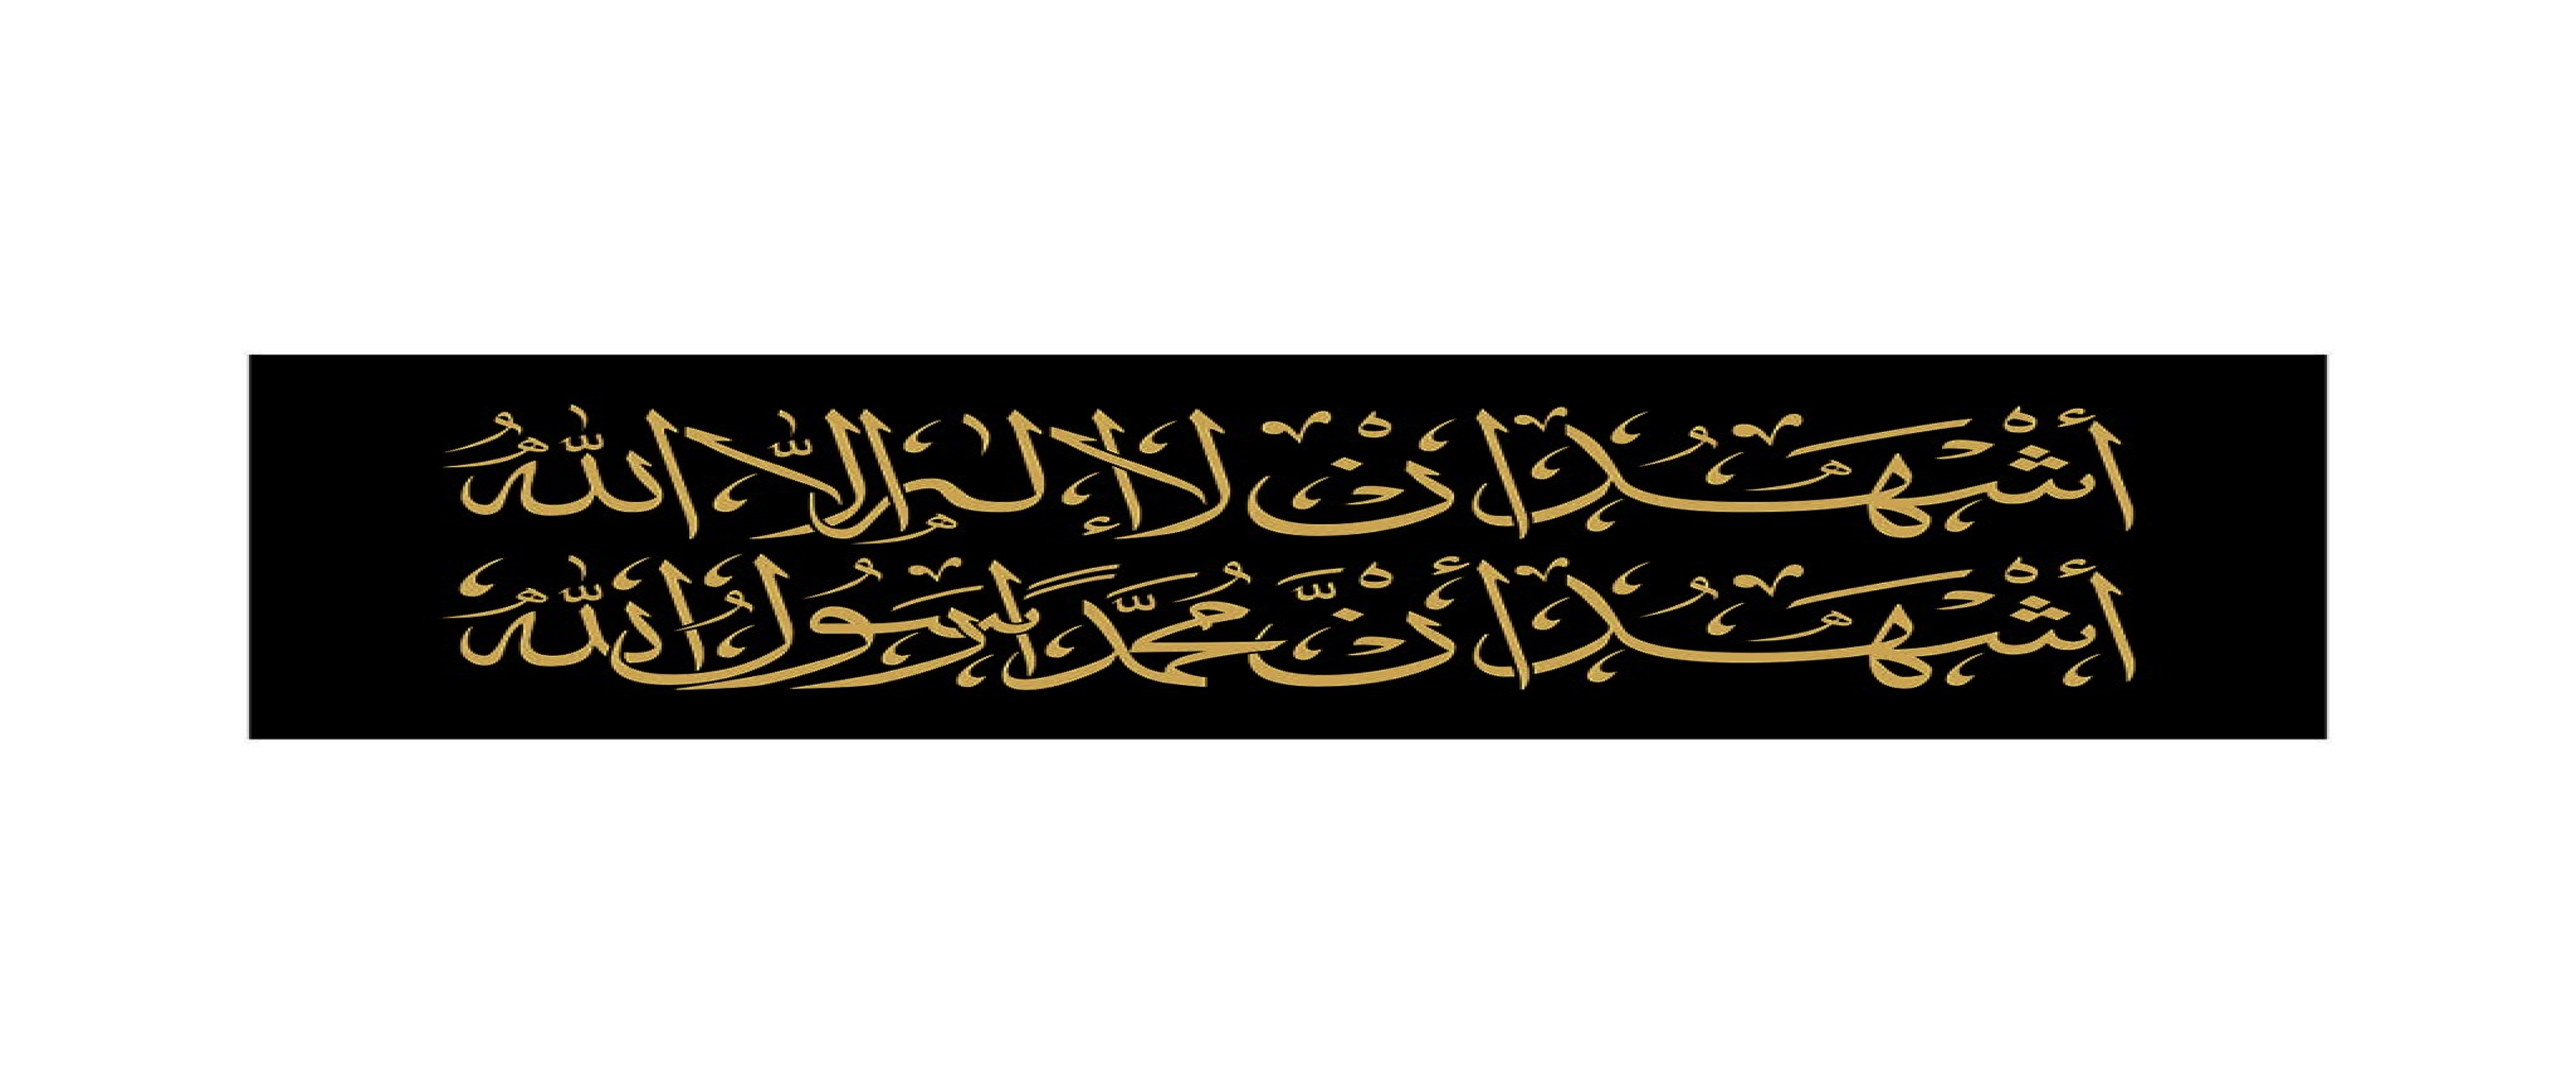 Wallpaper Kaligrafi Syahadat